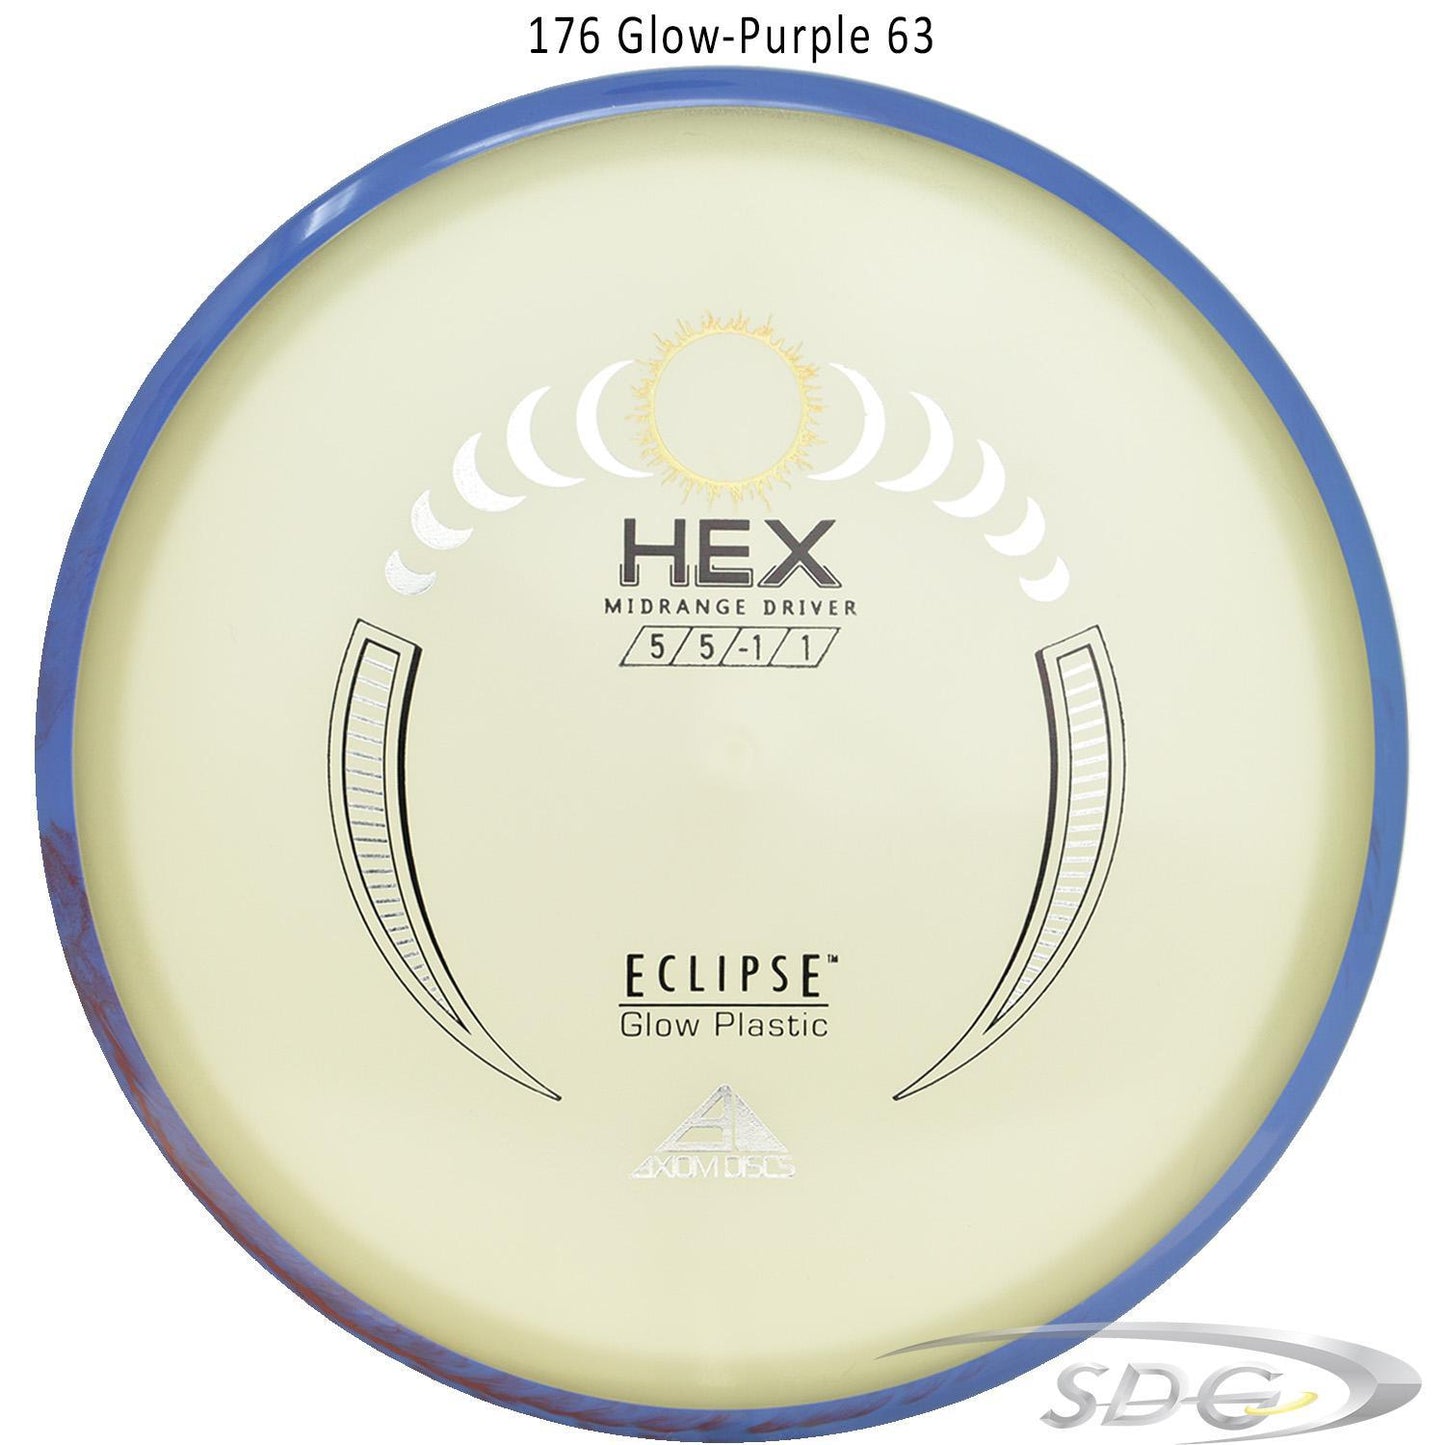 axiom-eclipse-hex-disc-golf-midrange 176 Glow-Purple 63